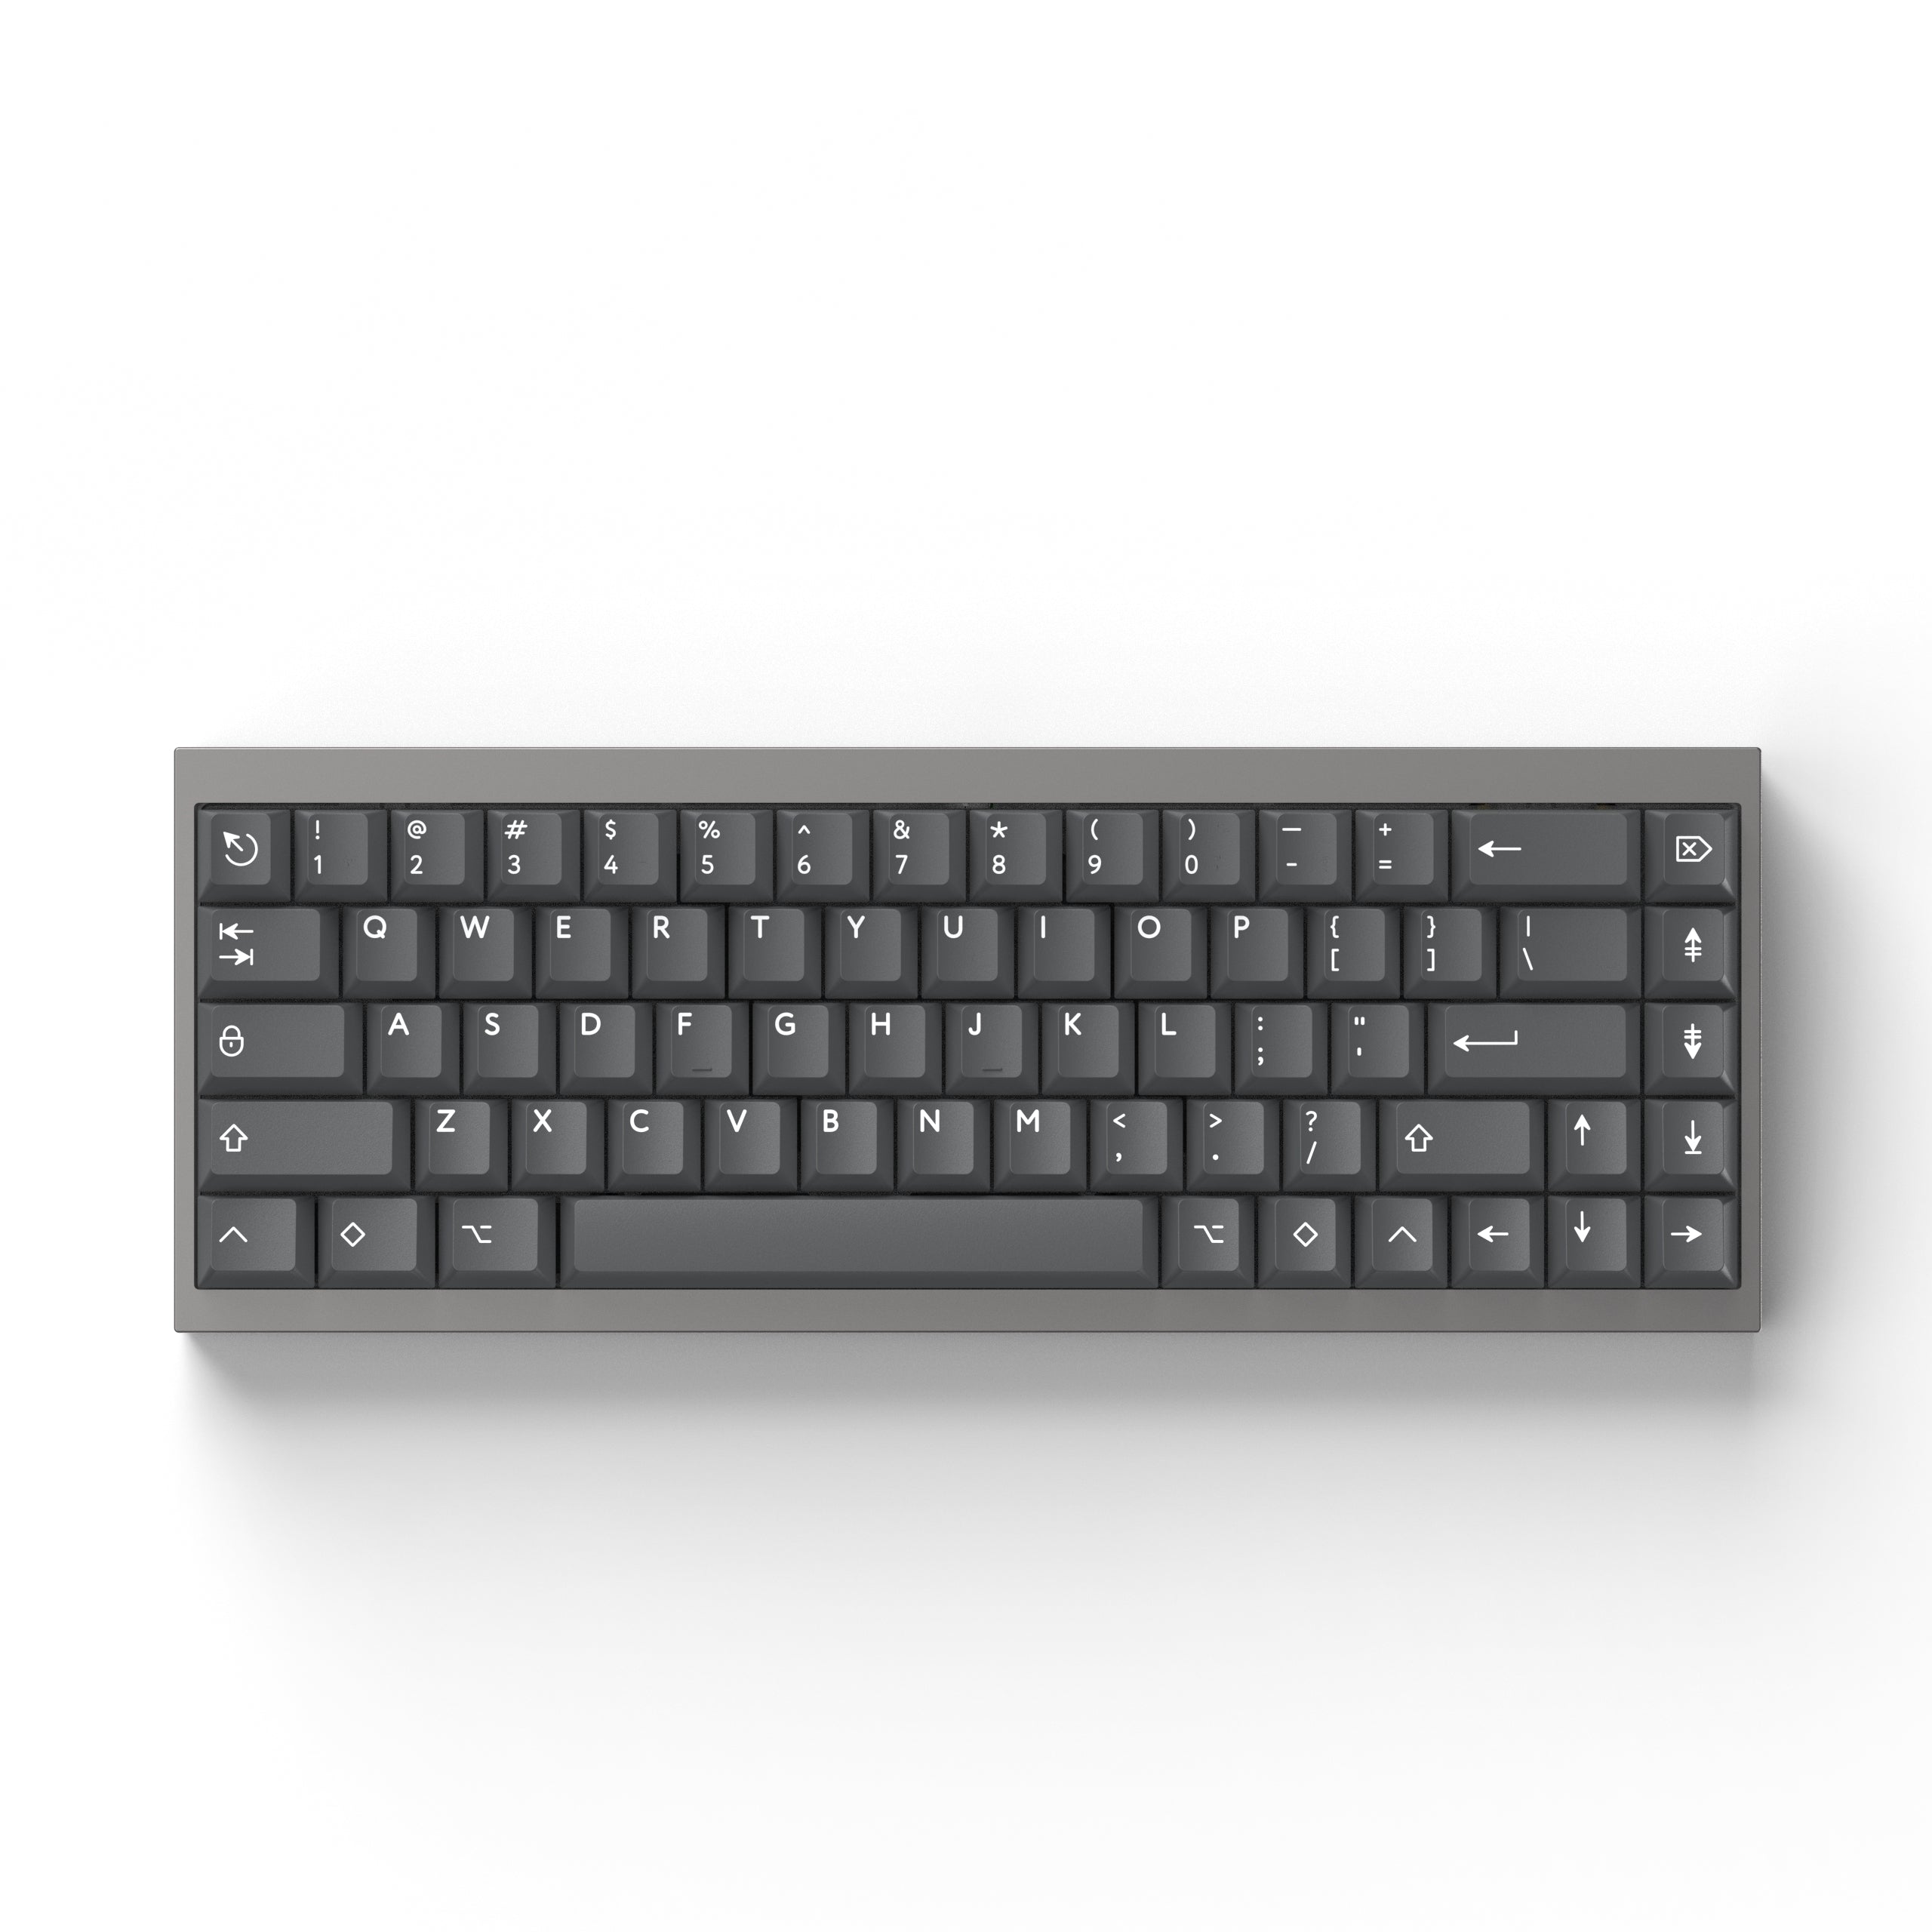 KBDfans Custom Keyboard Tofu65 2.0